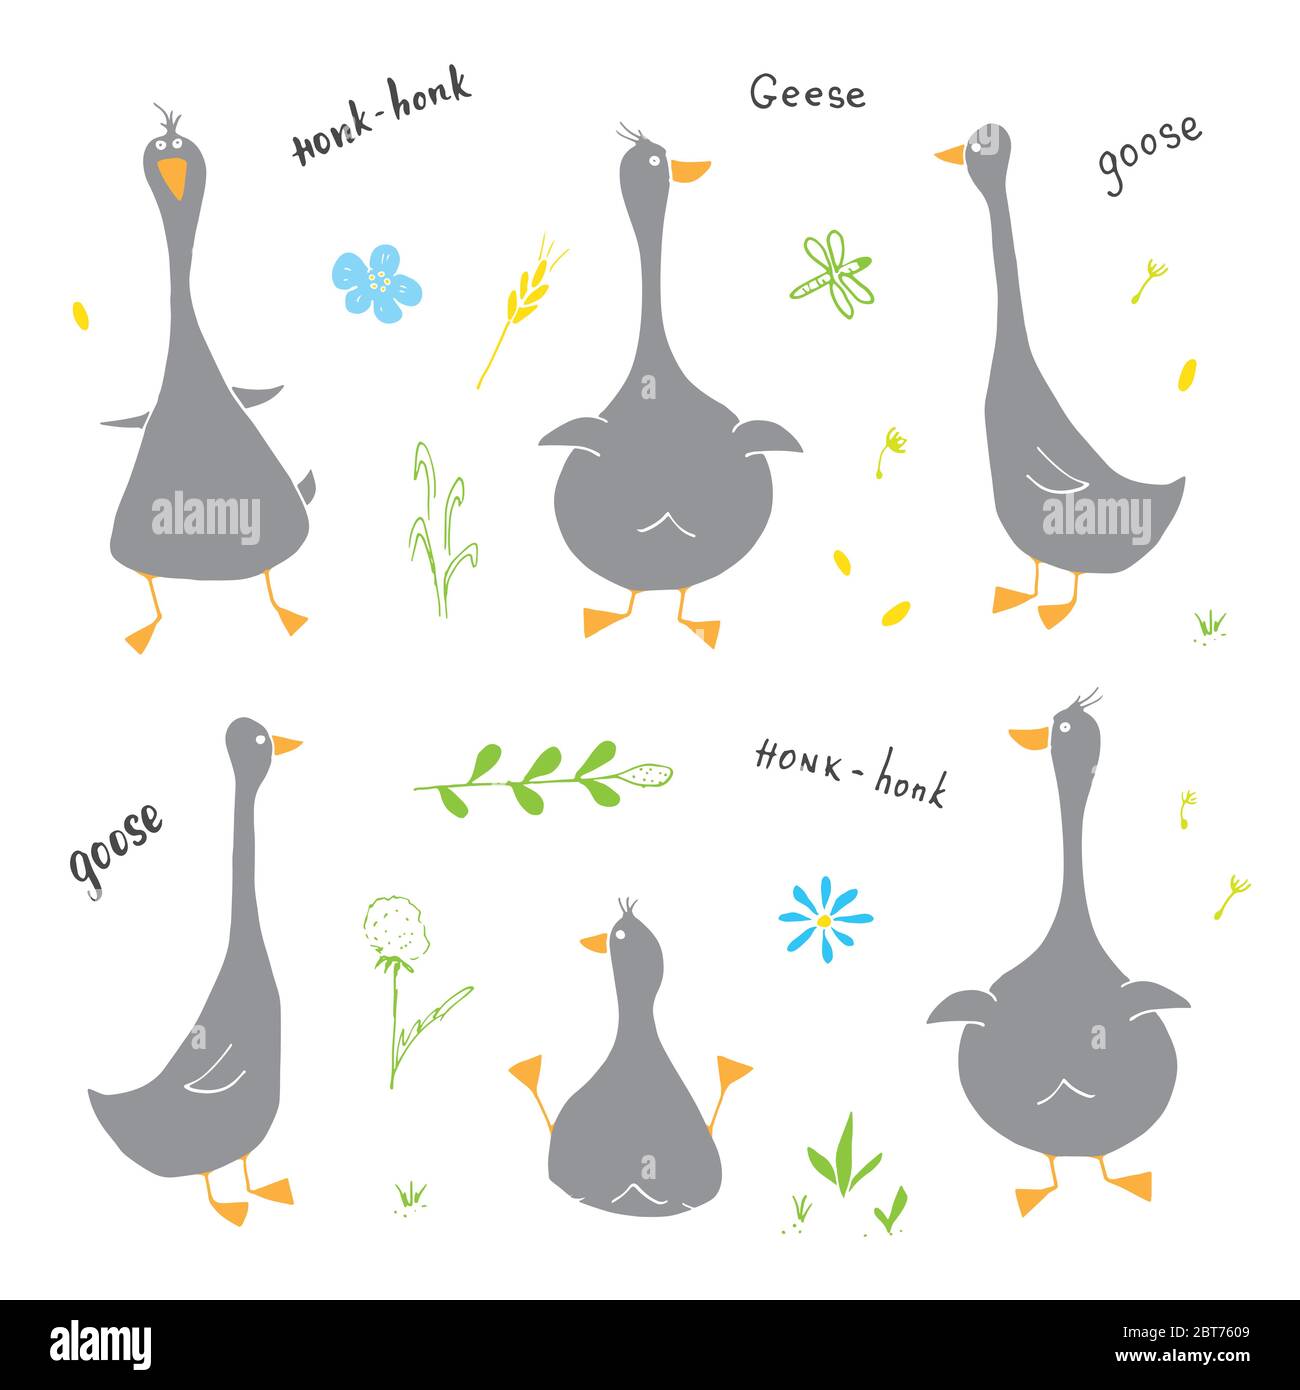 Goose, geese set of illustrations, cute cartoon drawings. Animal